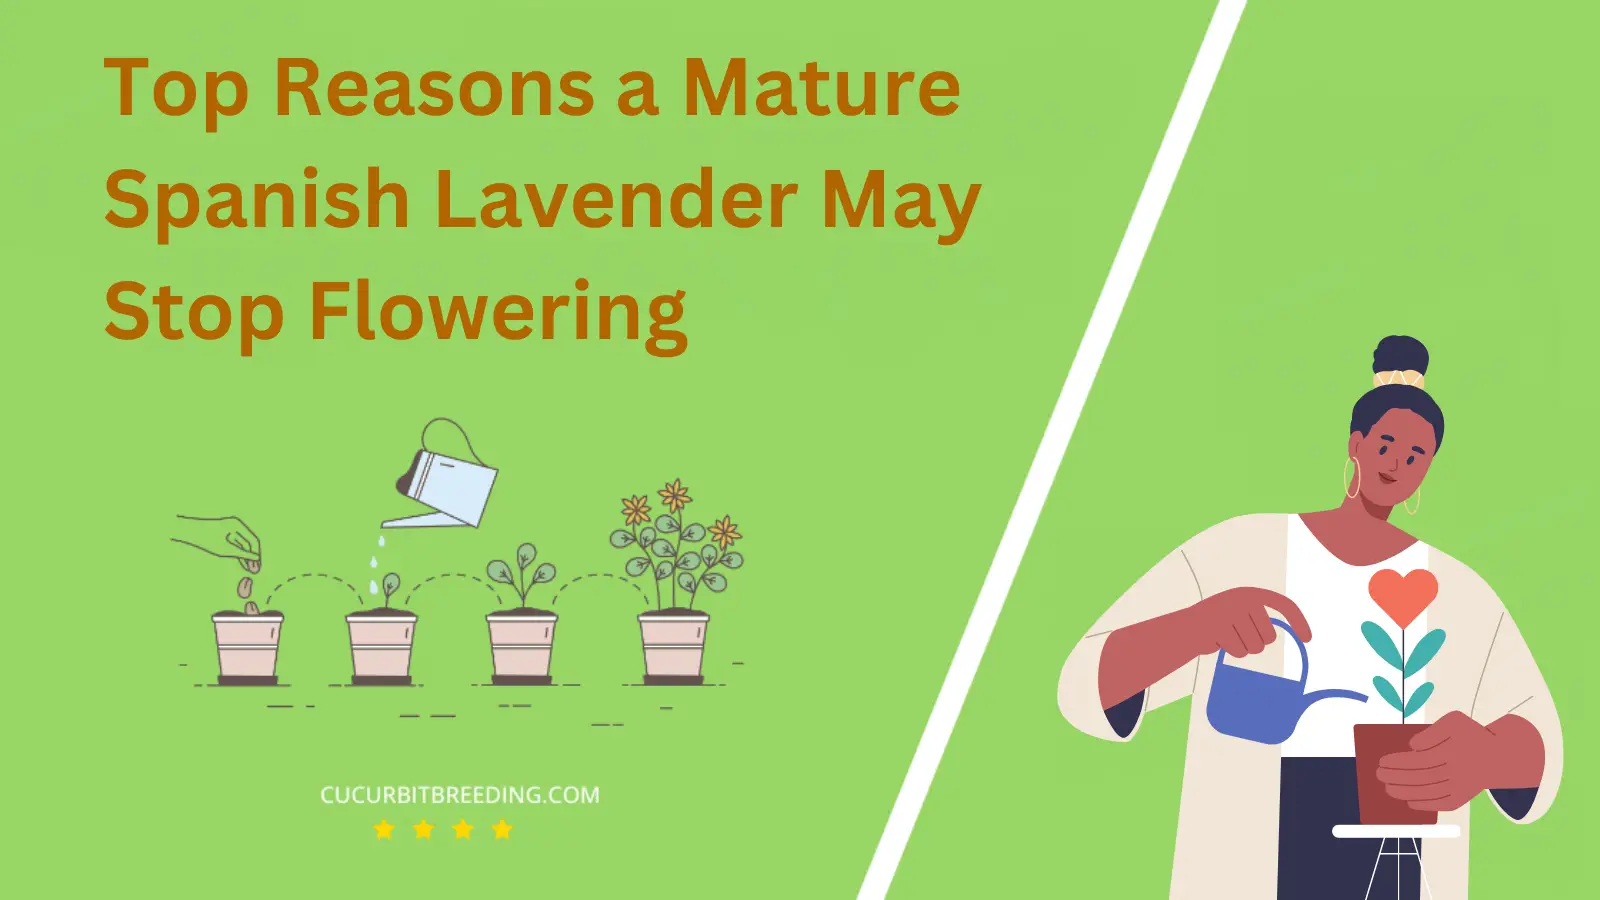 Top Reasons a Mature Spanish Lavender May Stop Flowering